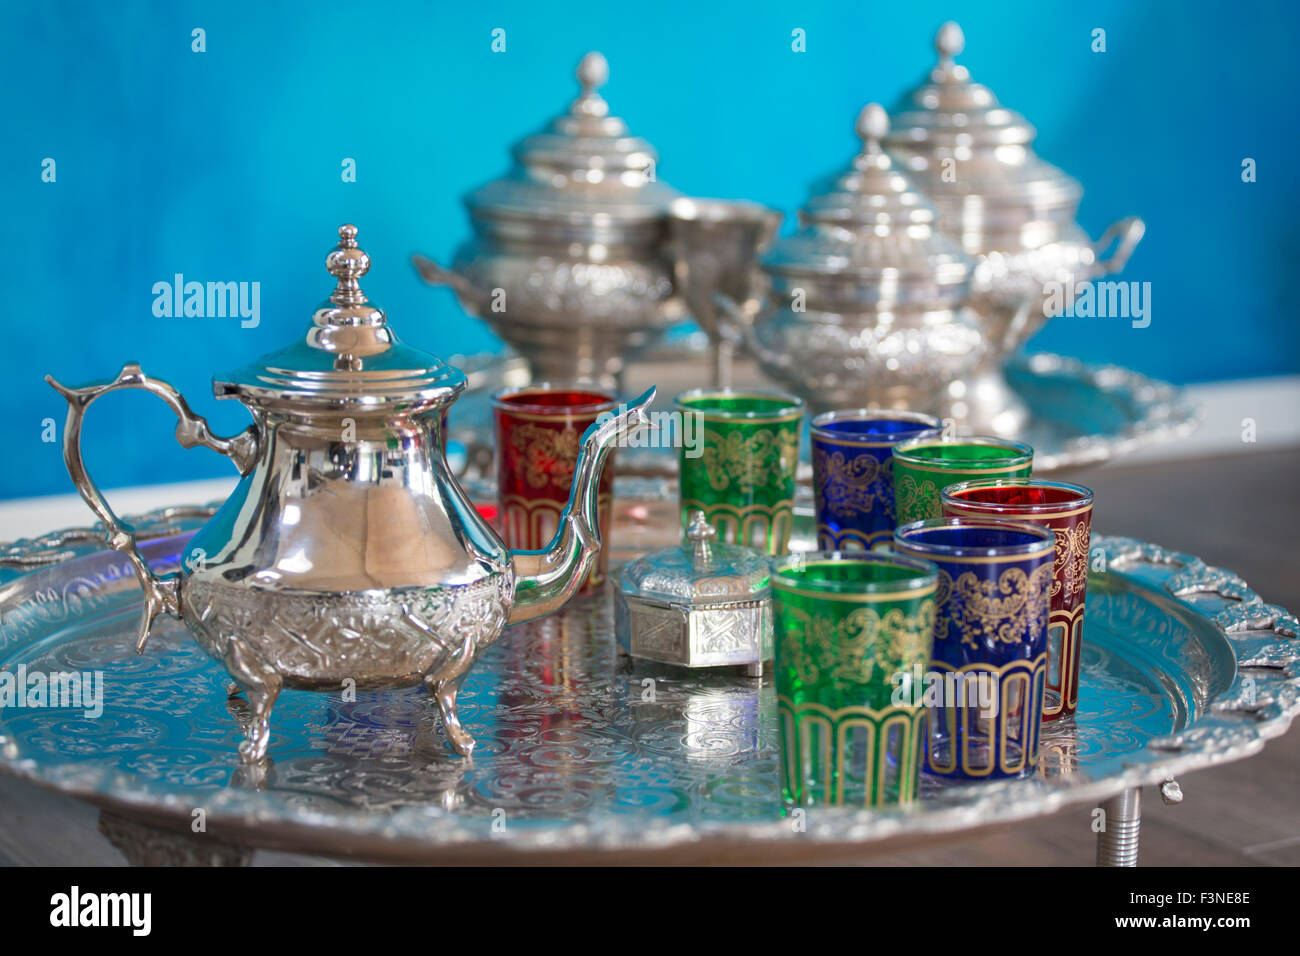 Moroccan tea set tea pot hi-res stock photography and images - Alamy